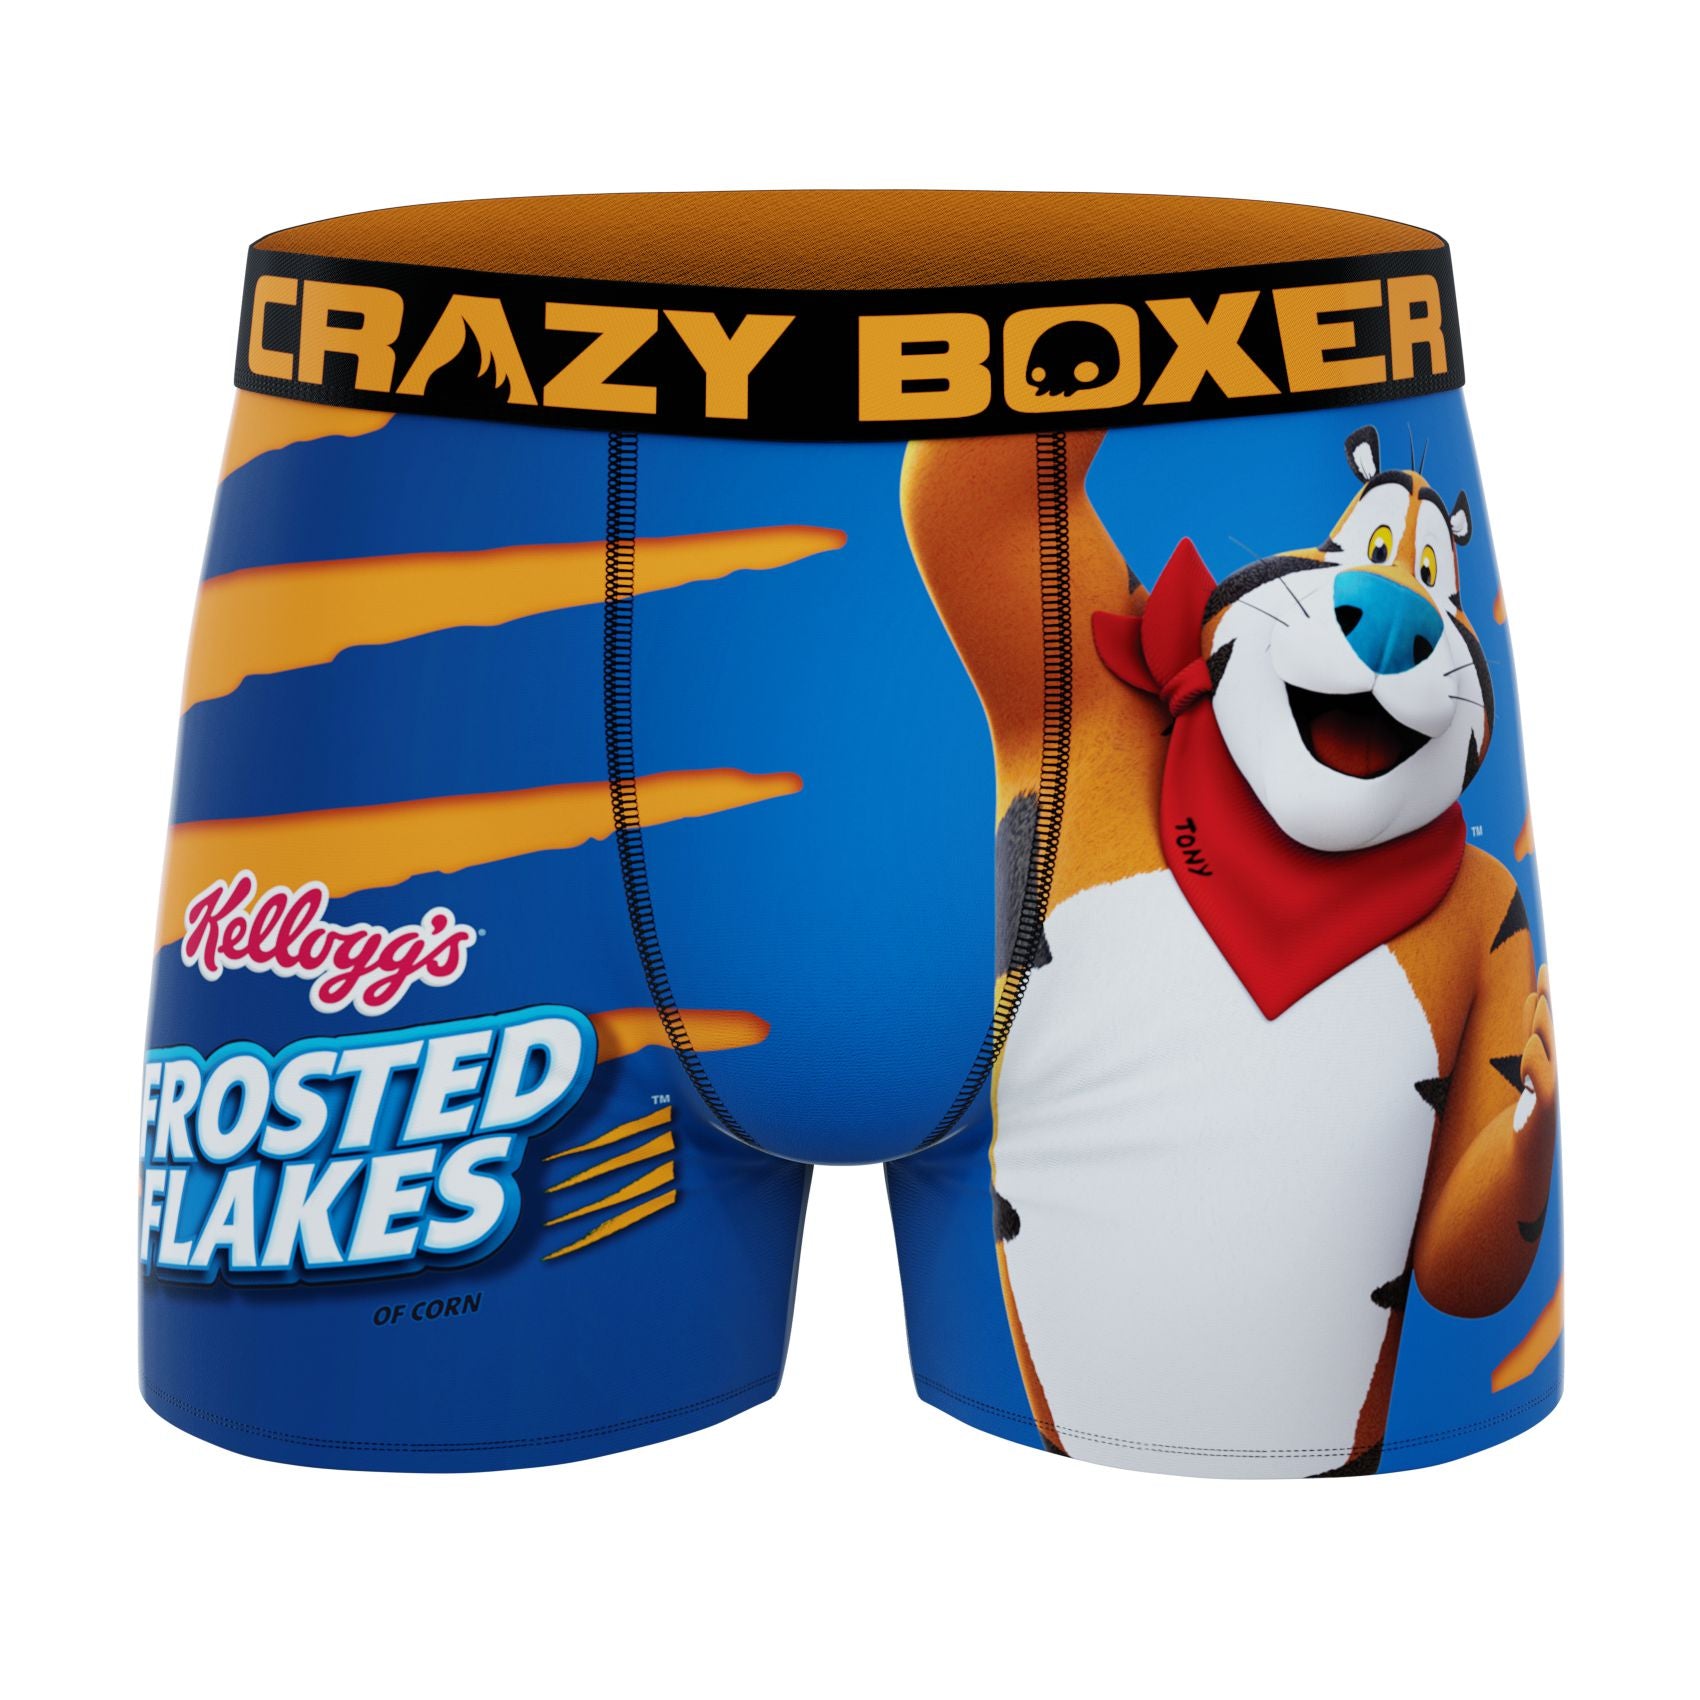 NEW Disney Store STITCH Underwear 3 pk BRIEFS sz 2 Boys Rare 